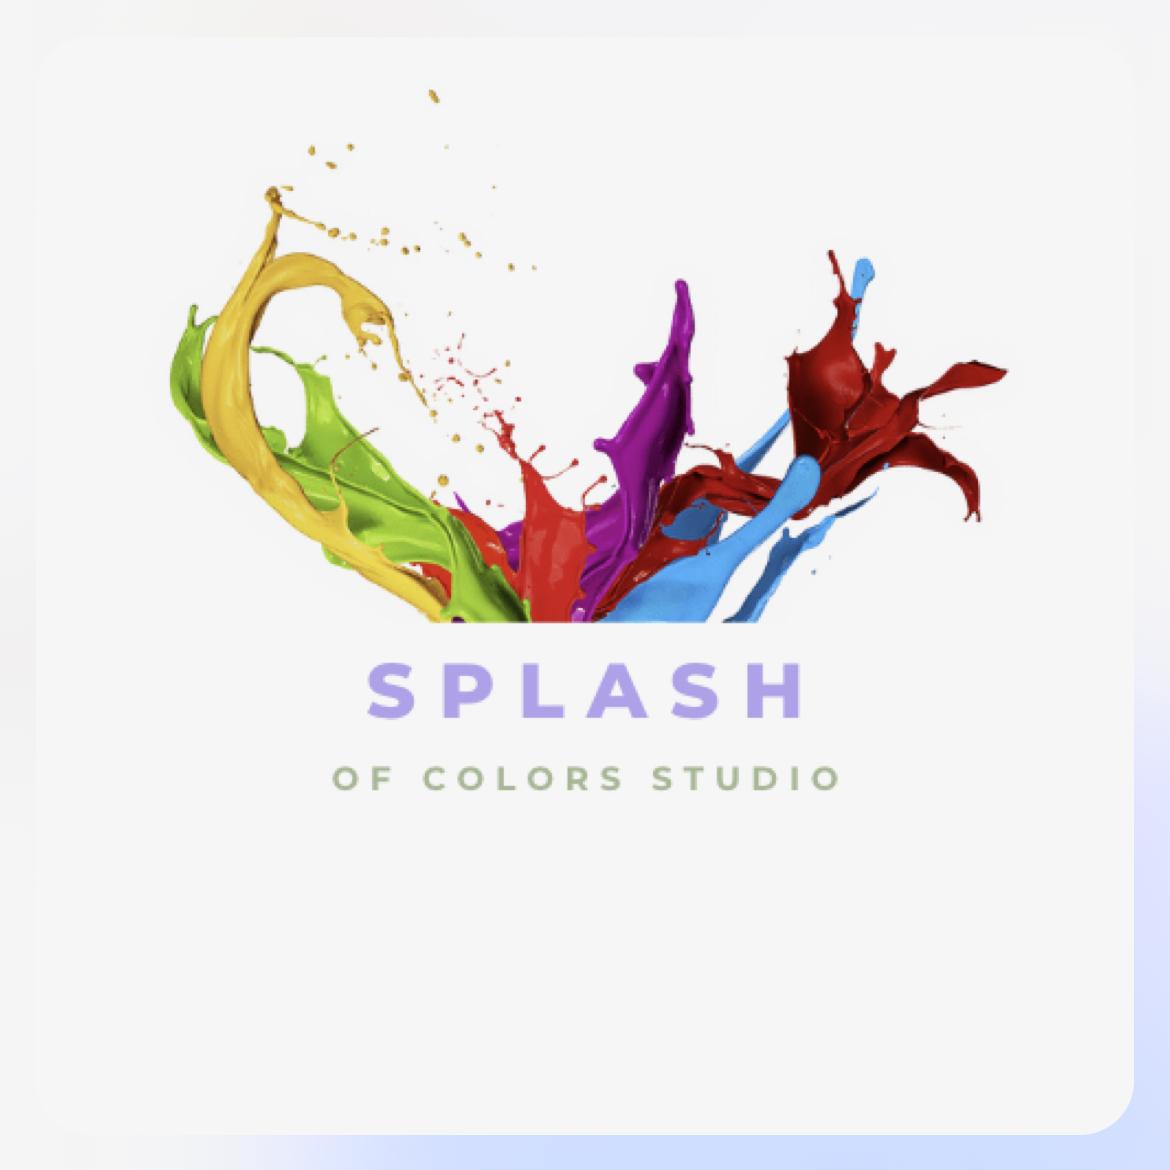 Splashofcolors's images